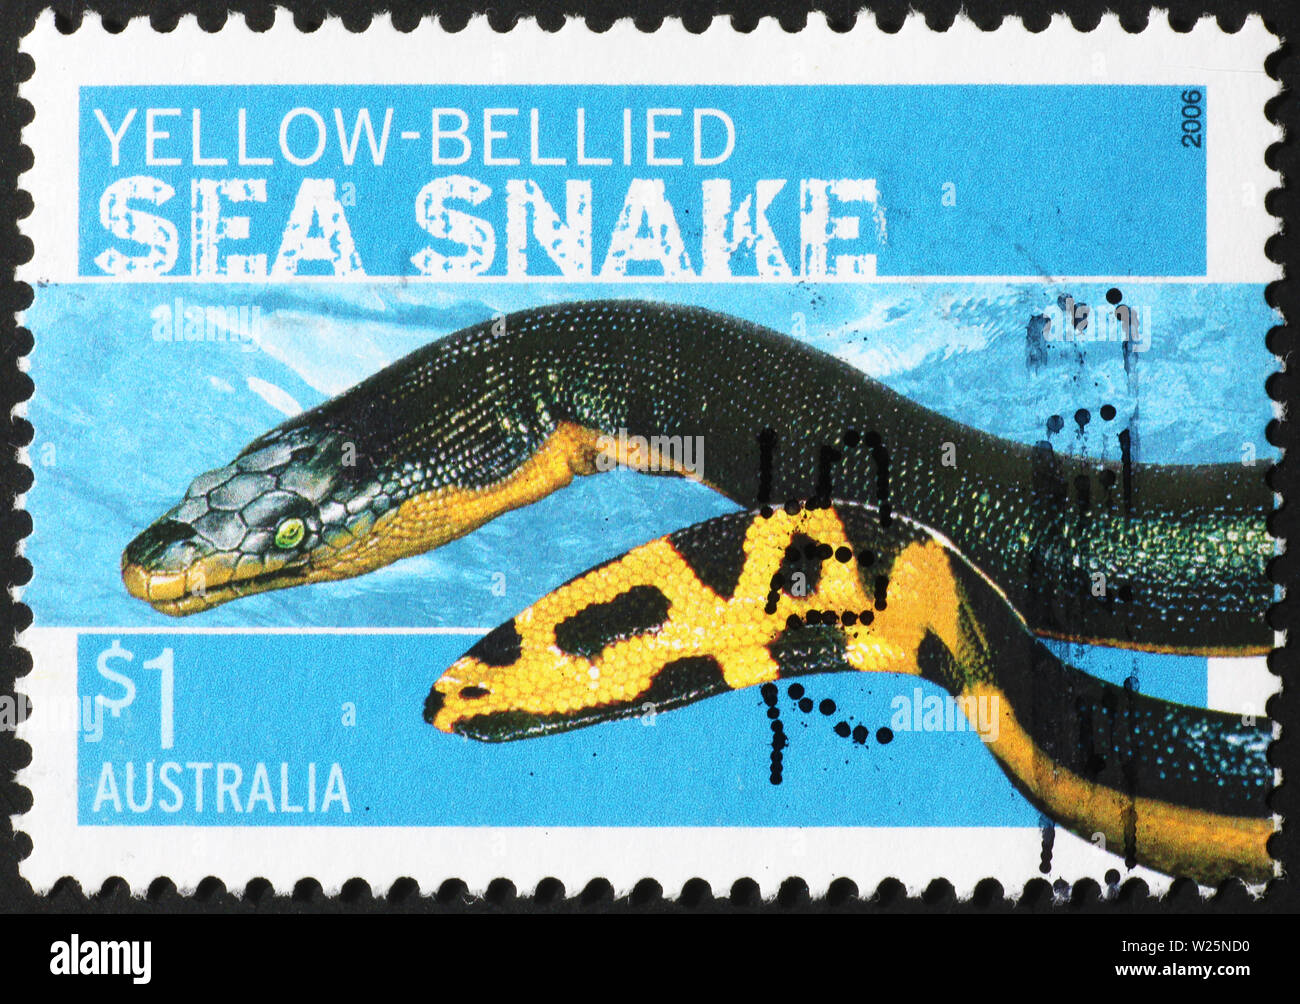 Yellow-bellied sea snake on australian postage stamp Stock Photo